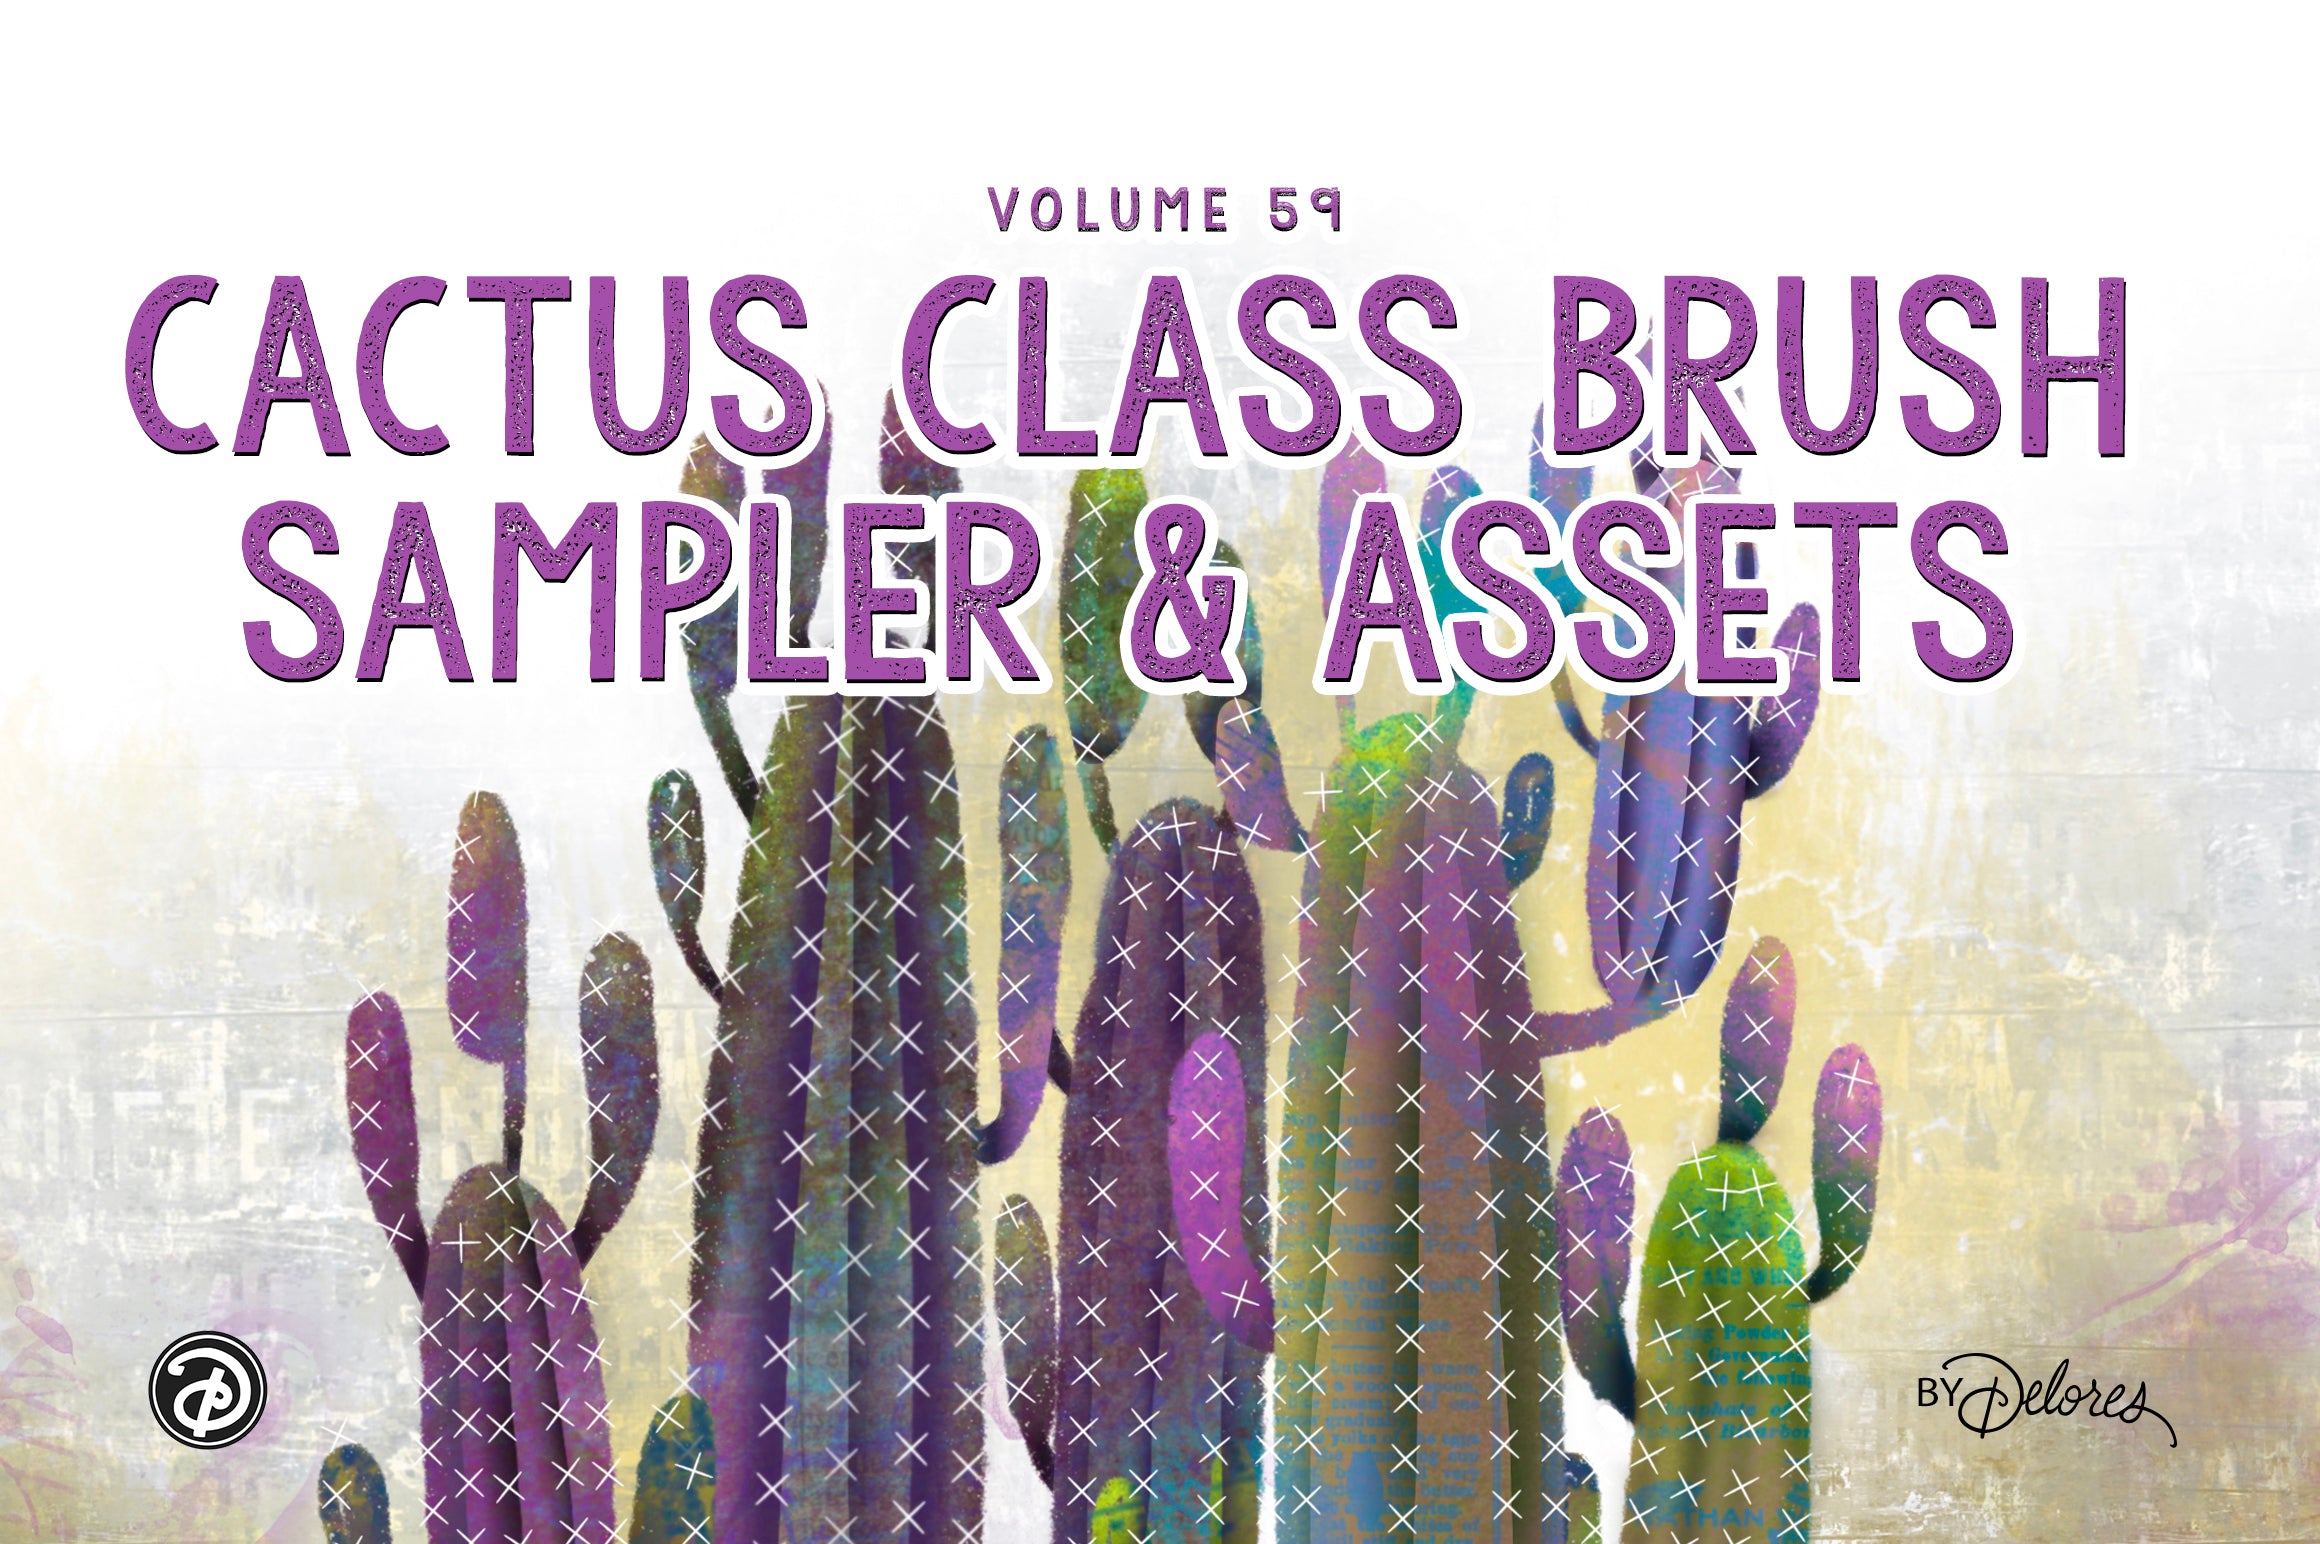 Volume 060 - Cactus Class Brush Sampler